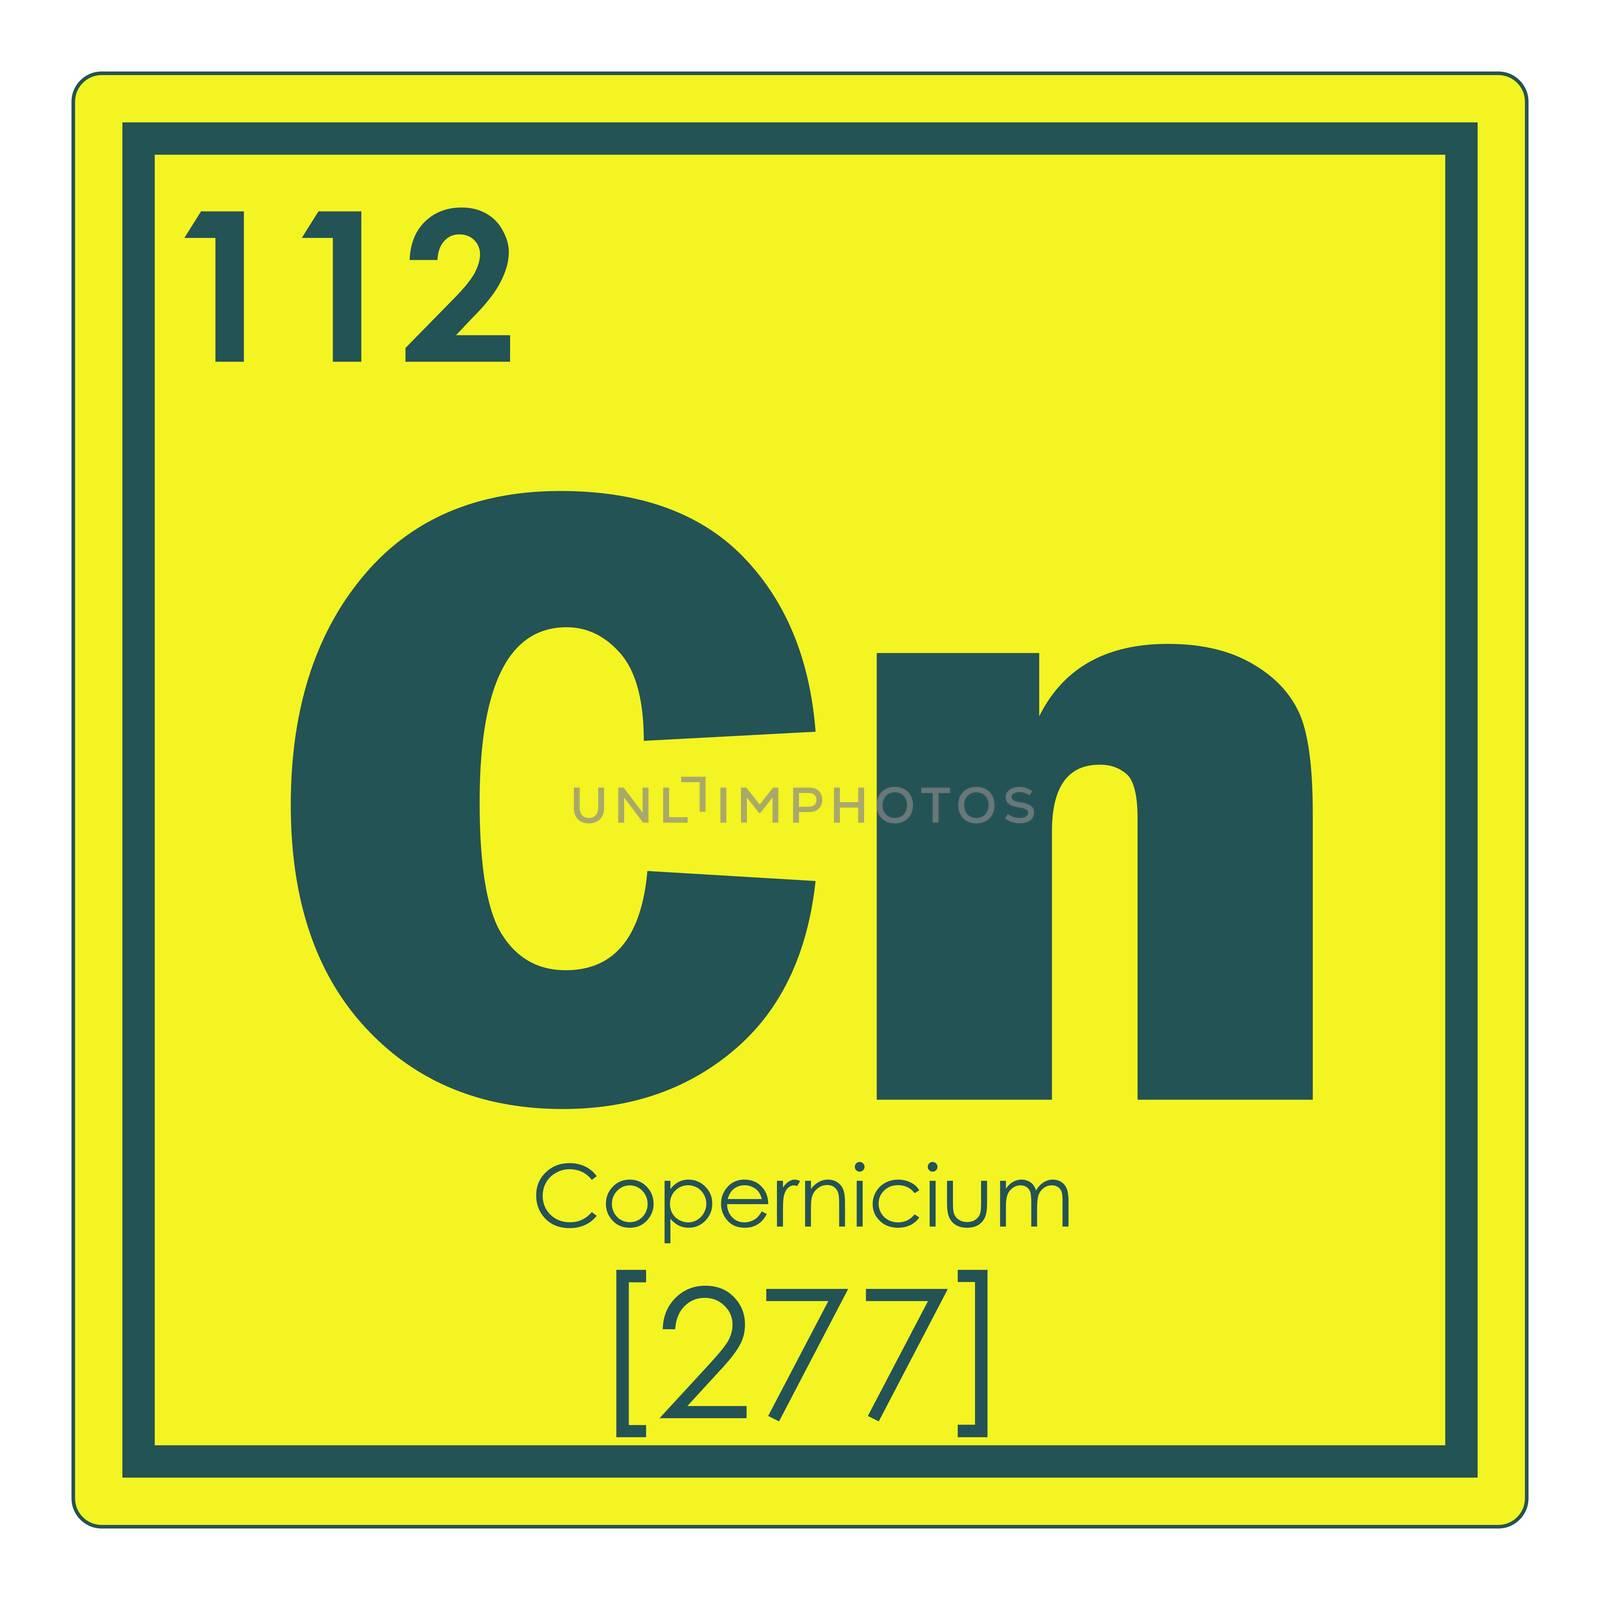 Copernicium chemical element by tony4urban